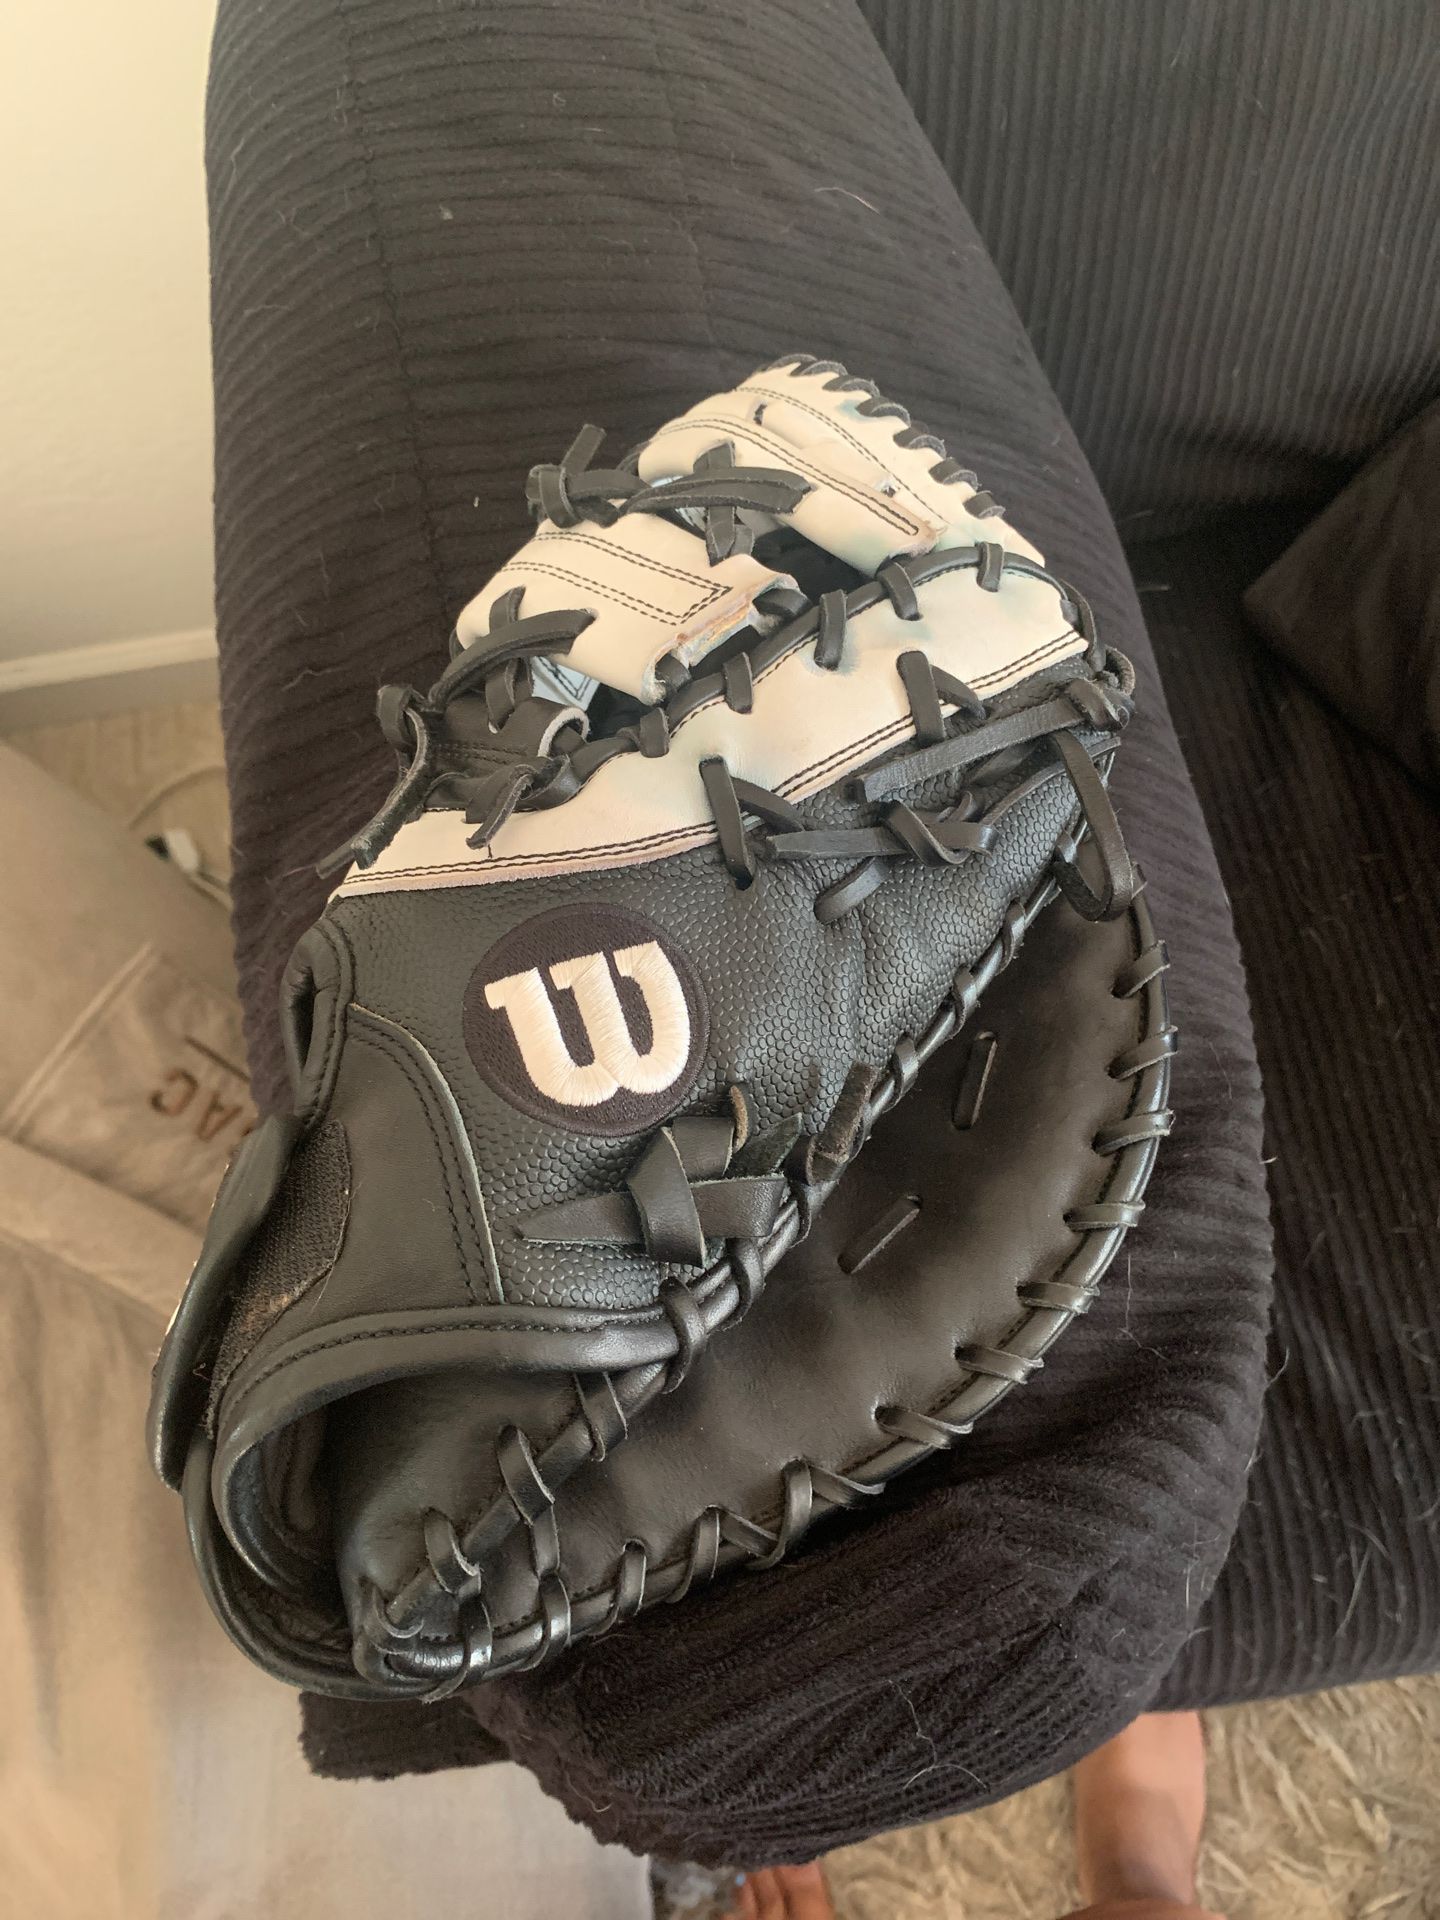 Wilson Softball/Baseball glove